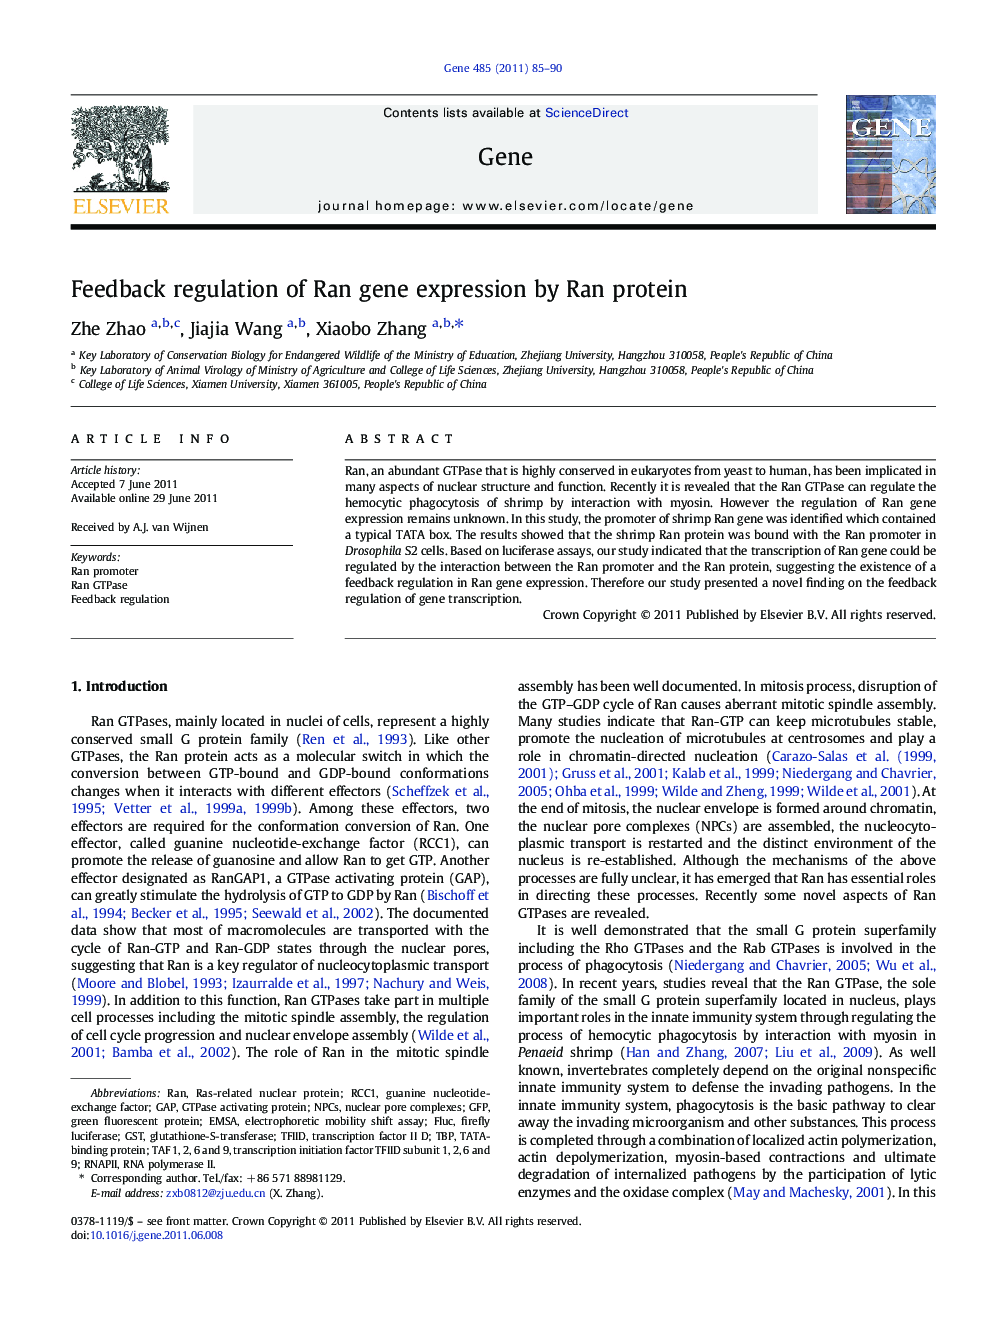 Feedback regulation of Ran gene expression by Ran protein